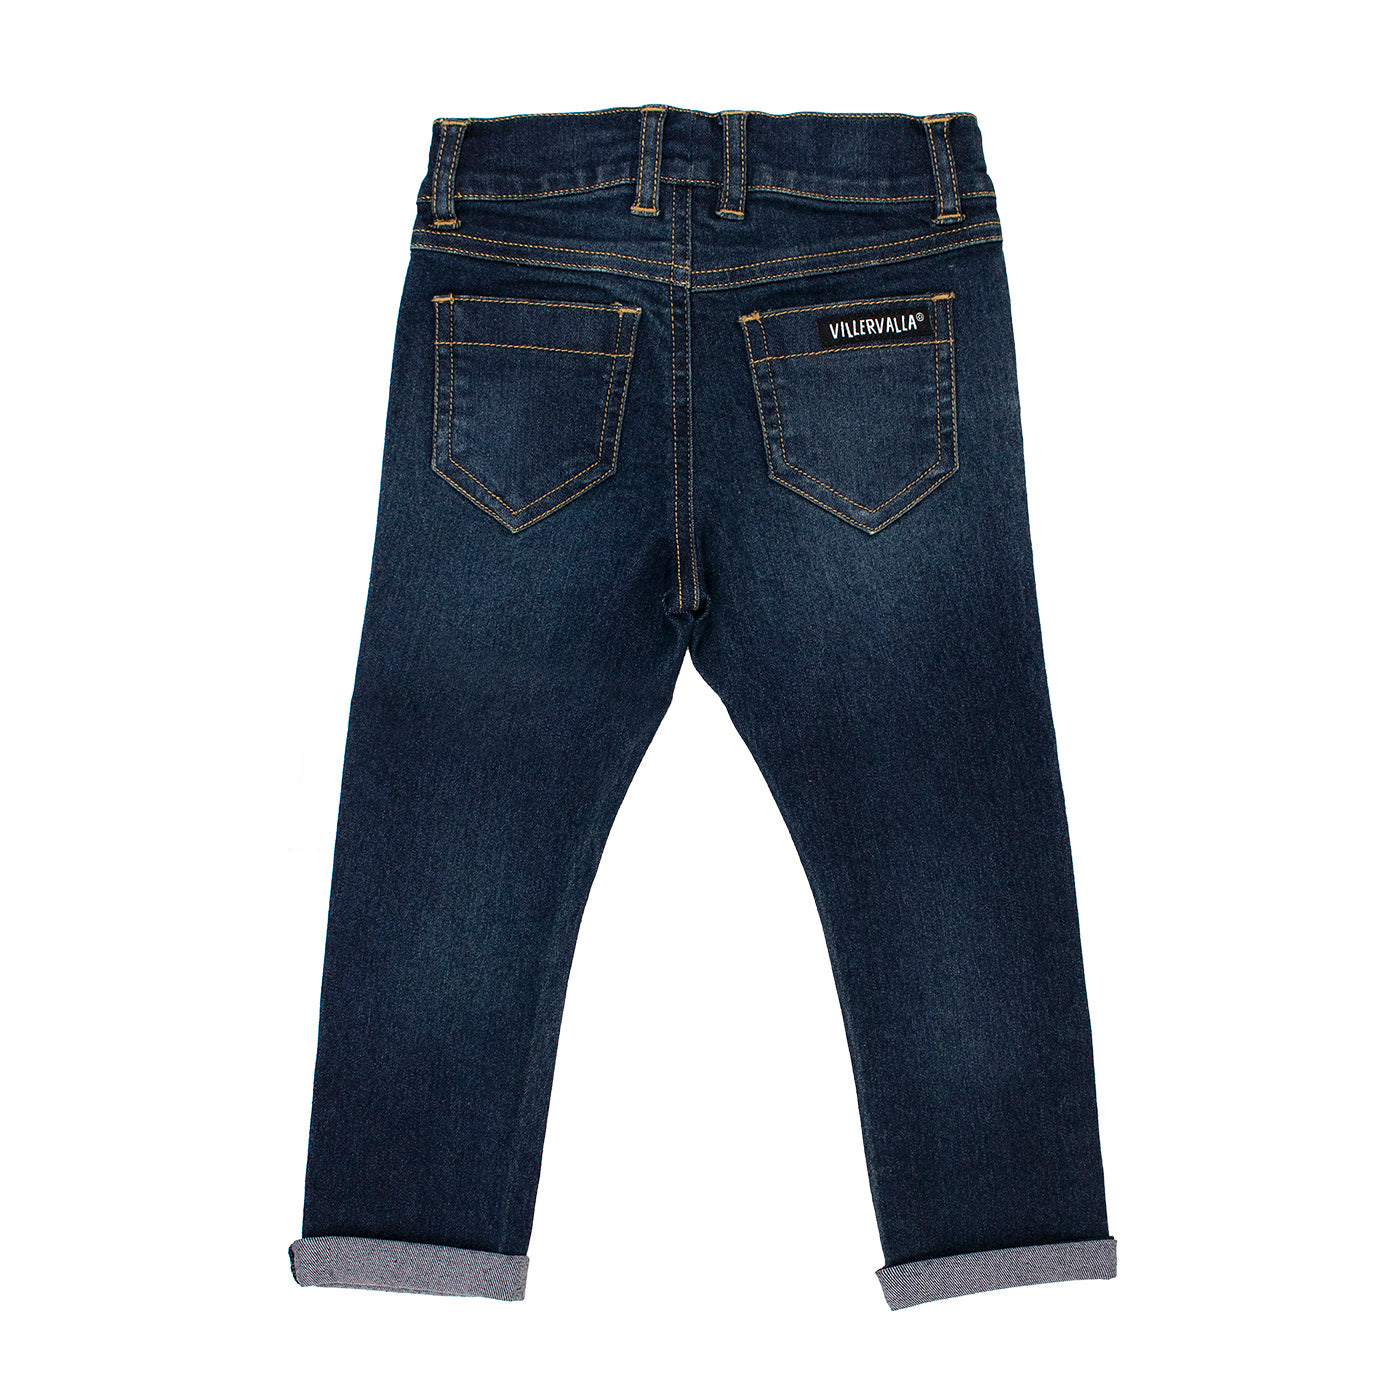 Villervalla Jeans Slim Pants Stretch Denim - Raw Vintage